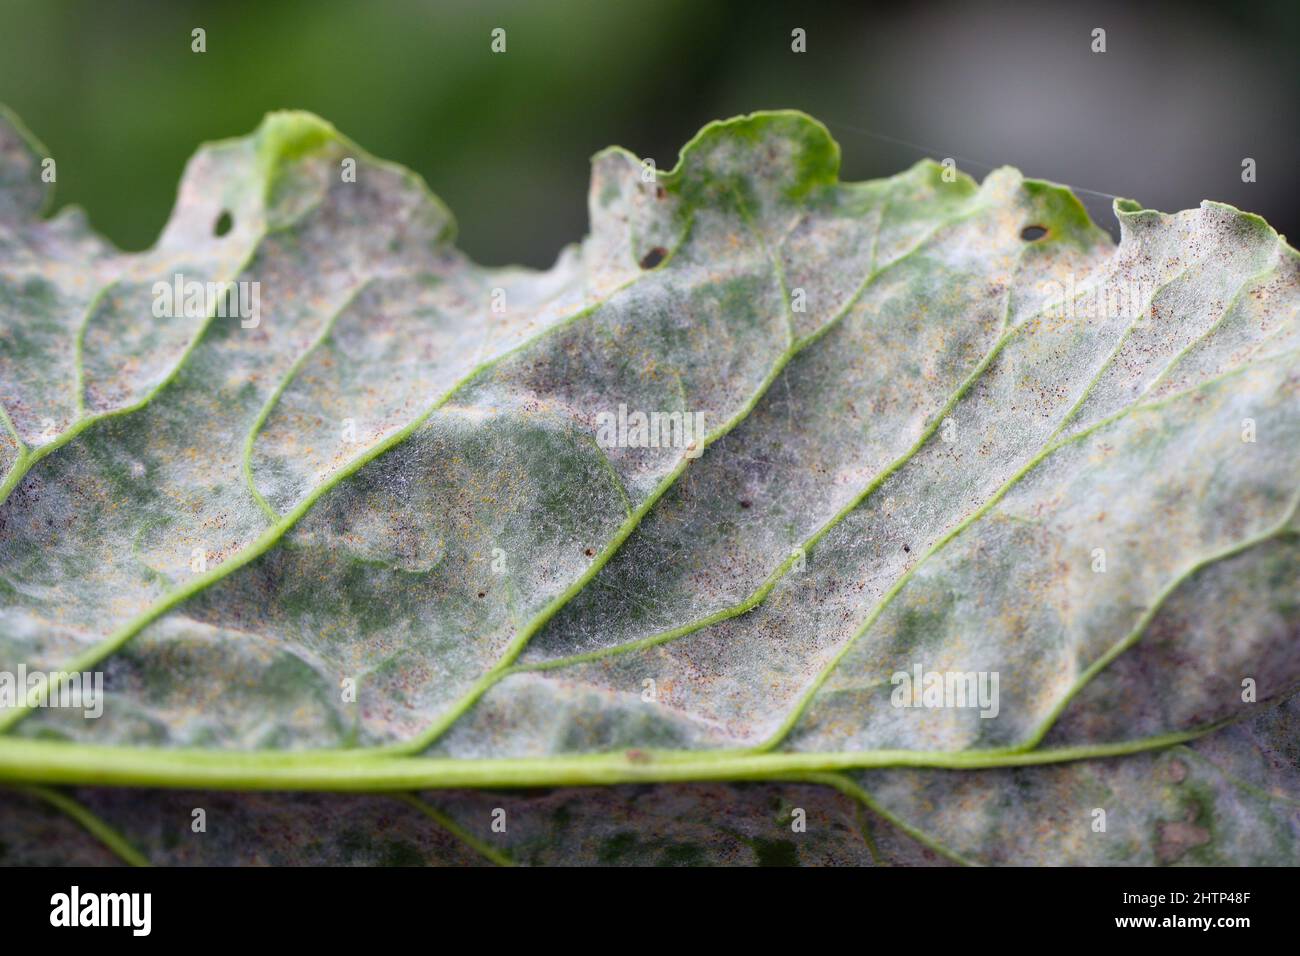 Powdery mildew Erysiphe betae fungal disease on sugar beet leaf Stock Photo